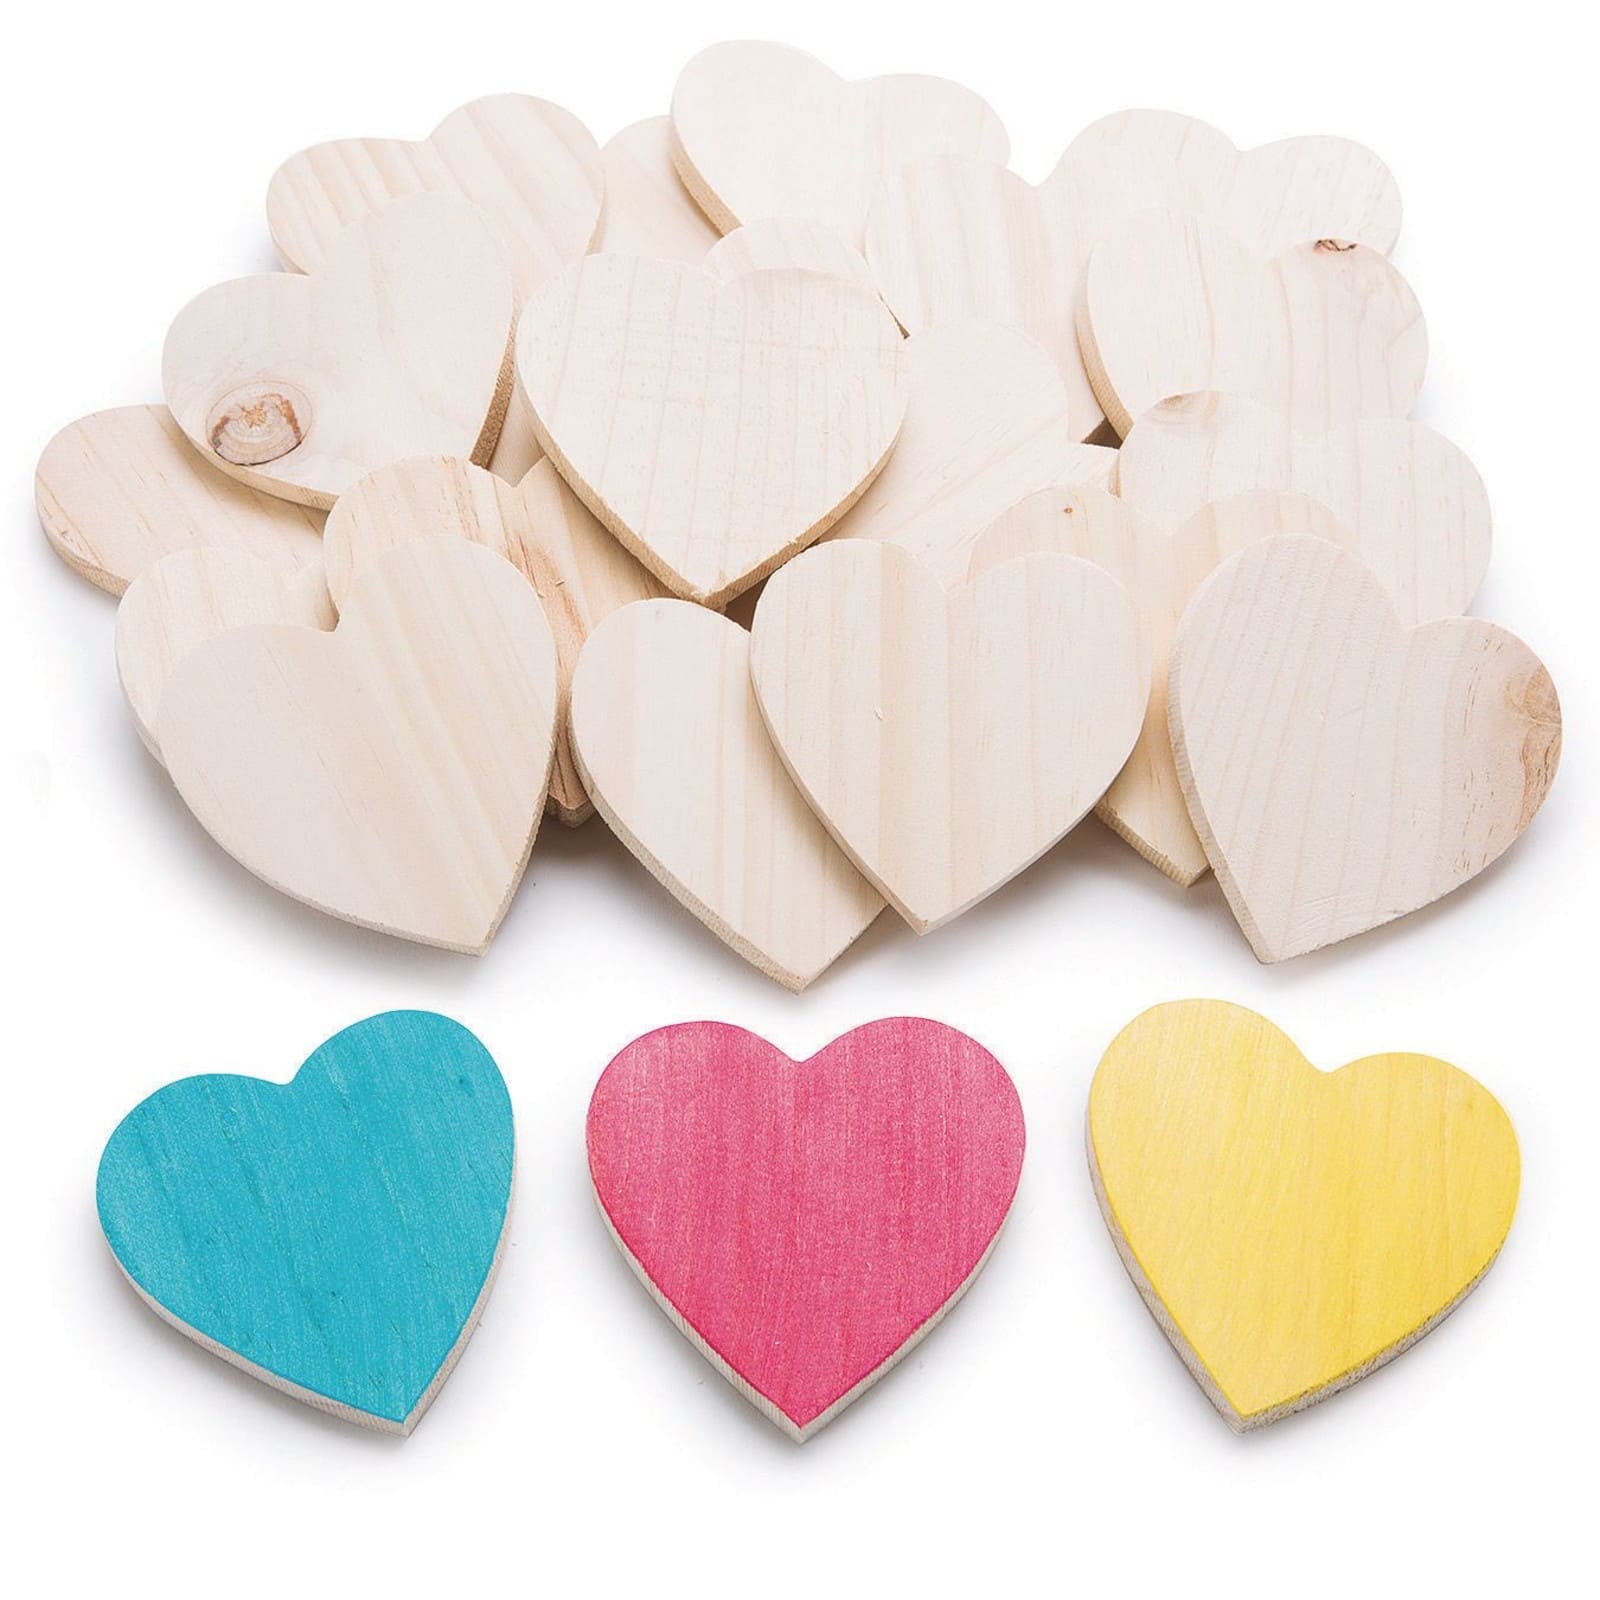 S&S® Worldwide 3 Wood Hearts, 25ct.